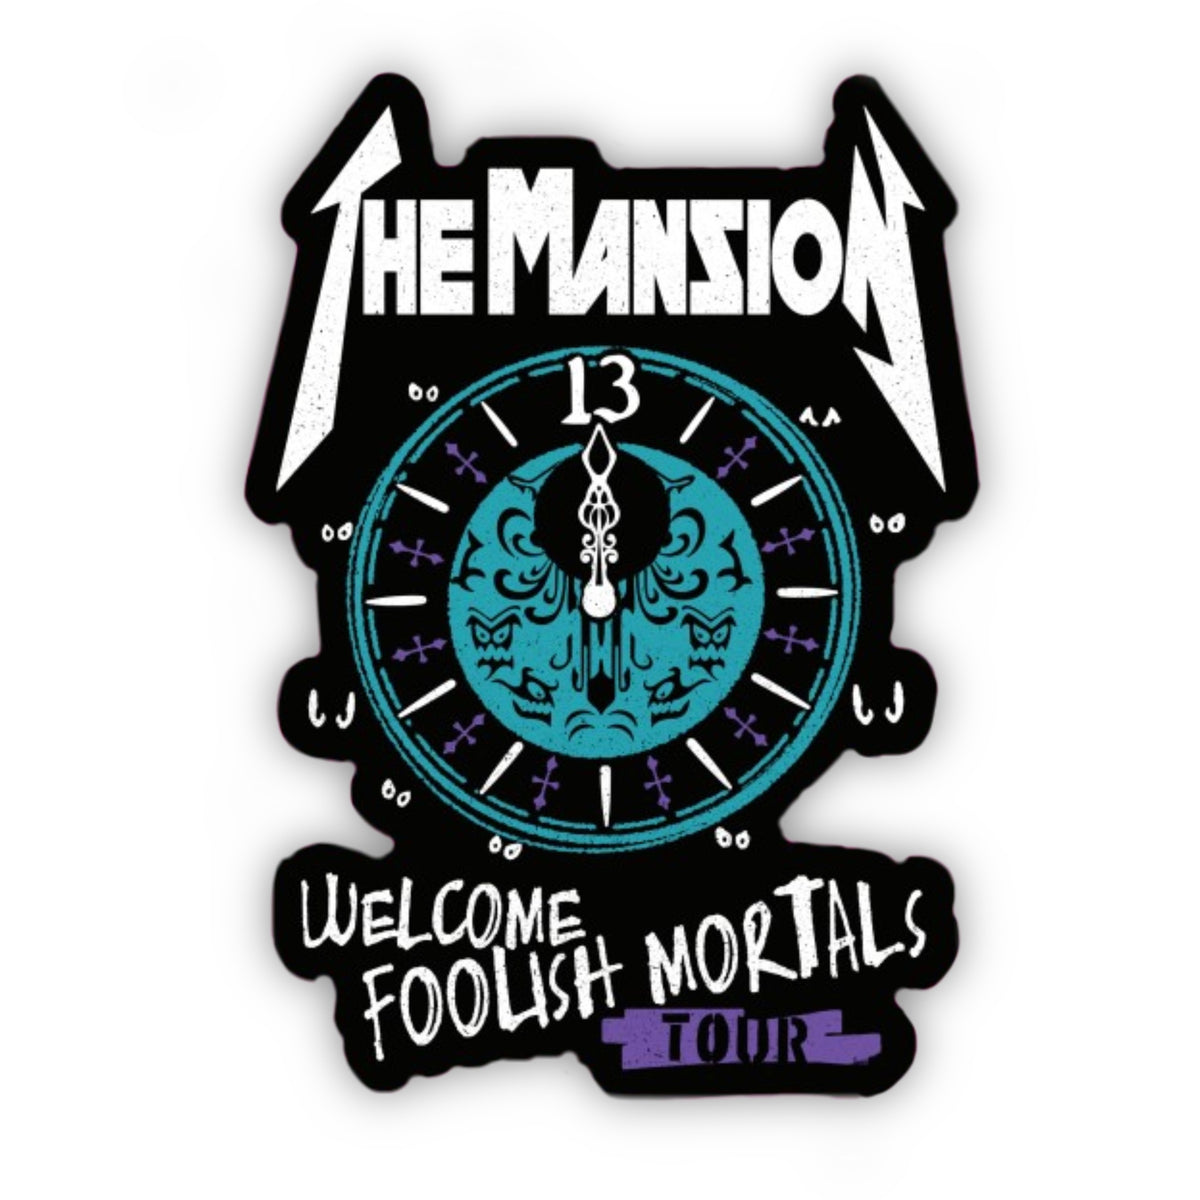 The Mansion Tour Sticker